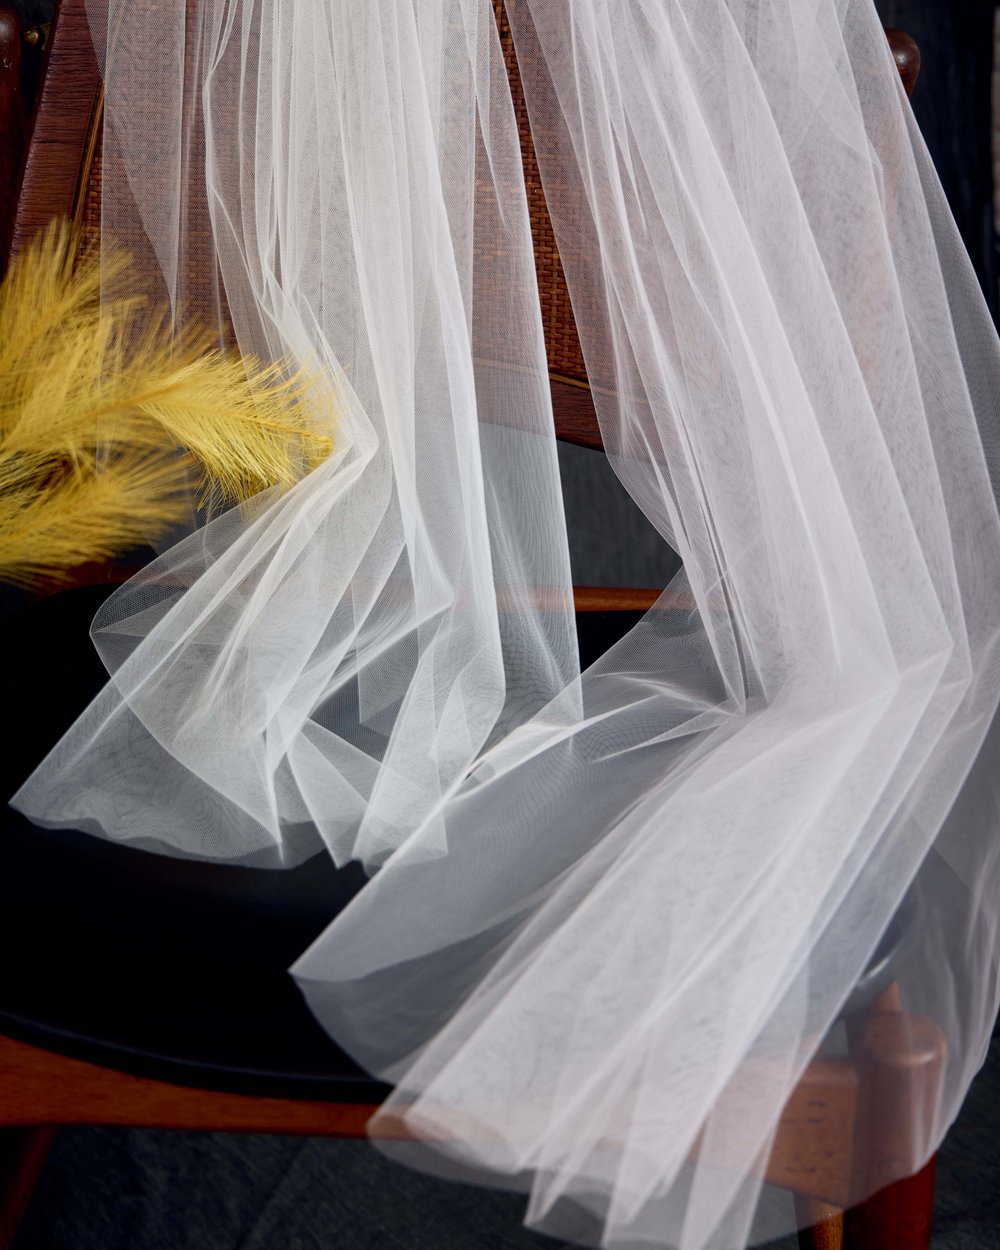 Aularso Ivory Wedding Veil for Brides Elbow Length Short Veils Star Moon  Bridal Veils With Comb 3-Tier Birdcage Veil Grid Hair Accessories Soft  Tulle